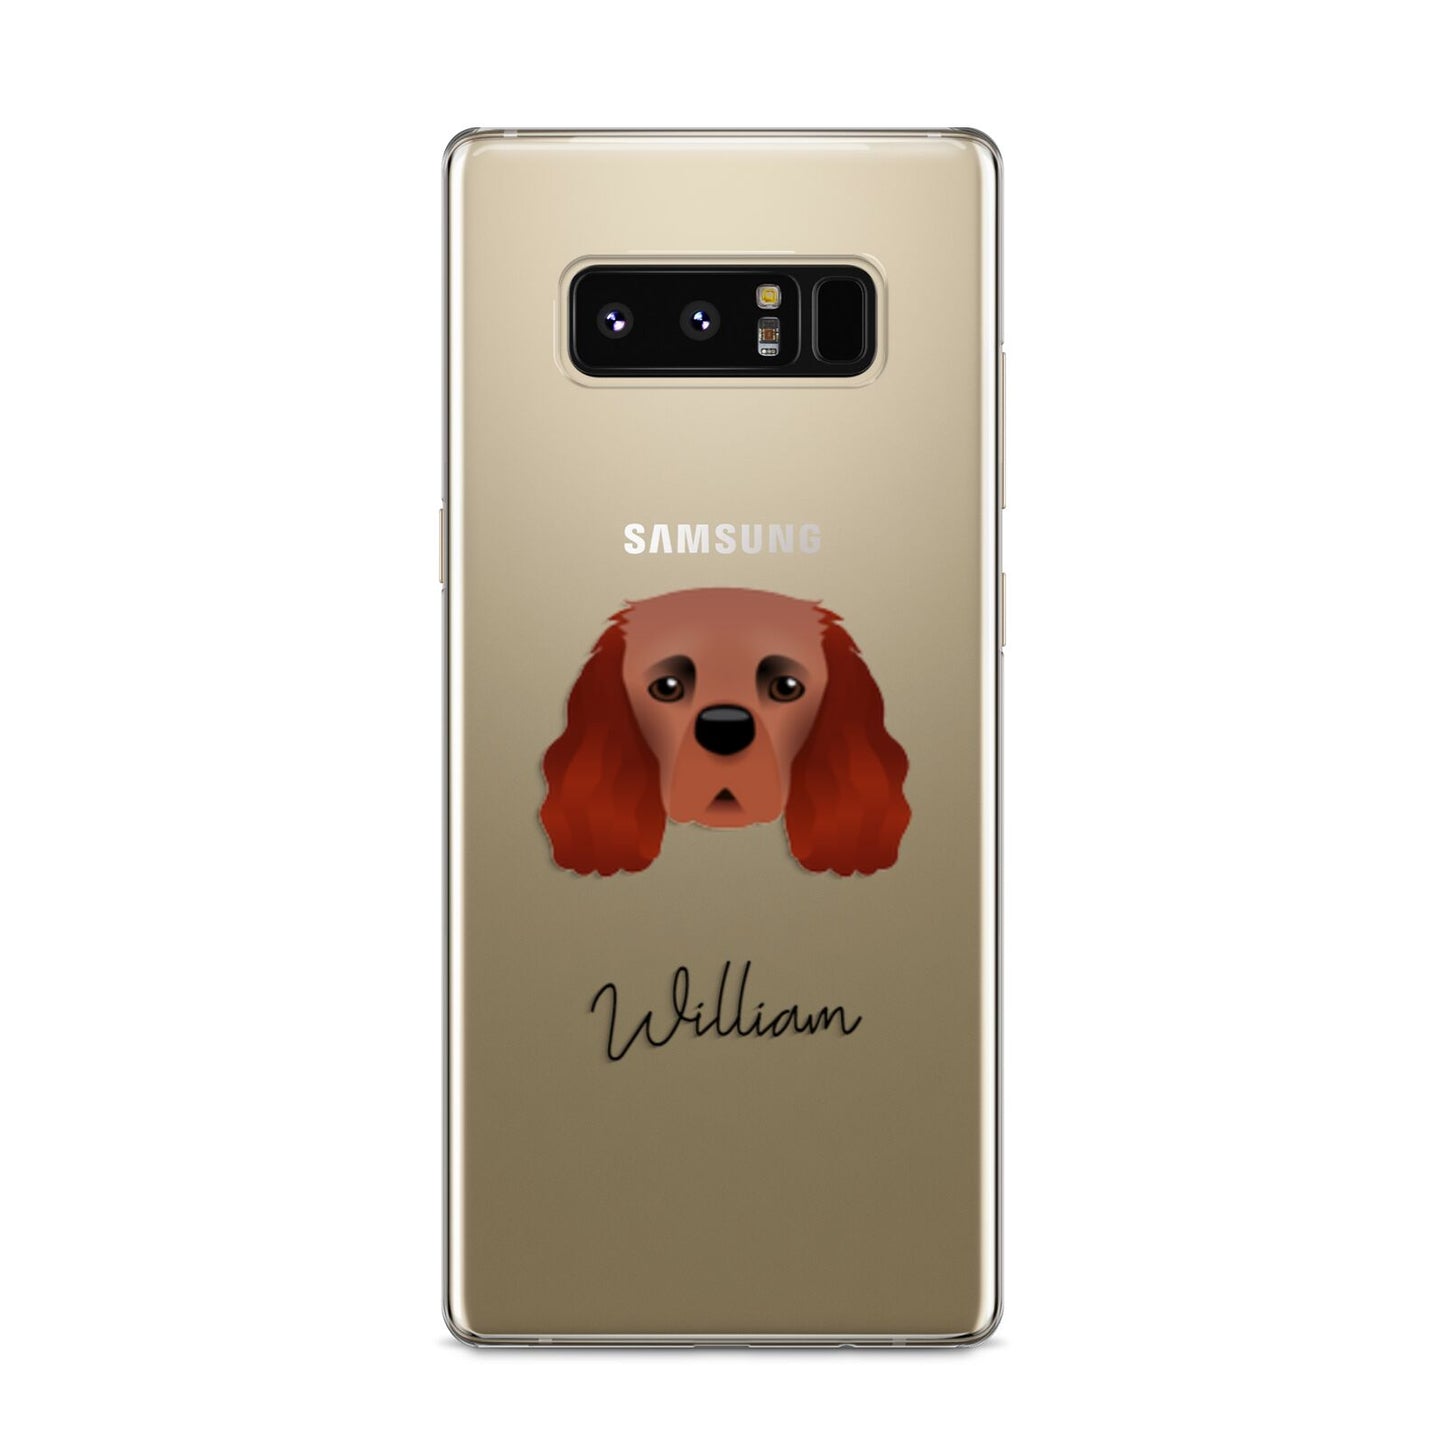 Cavalier King Charles Spaniel Personalised Samsung Galaxy S8 Case